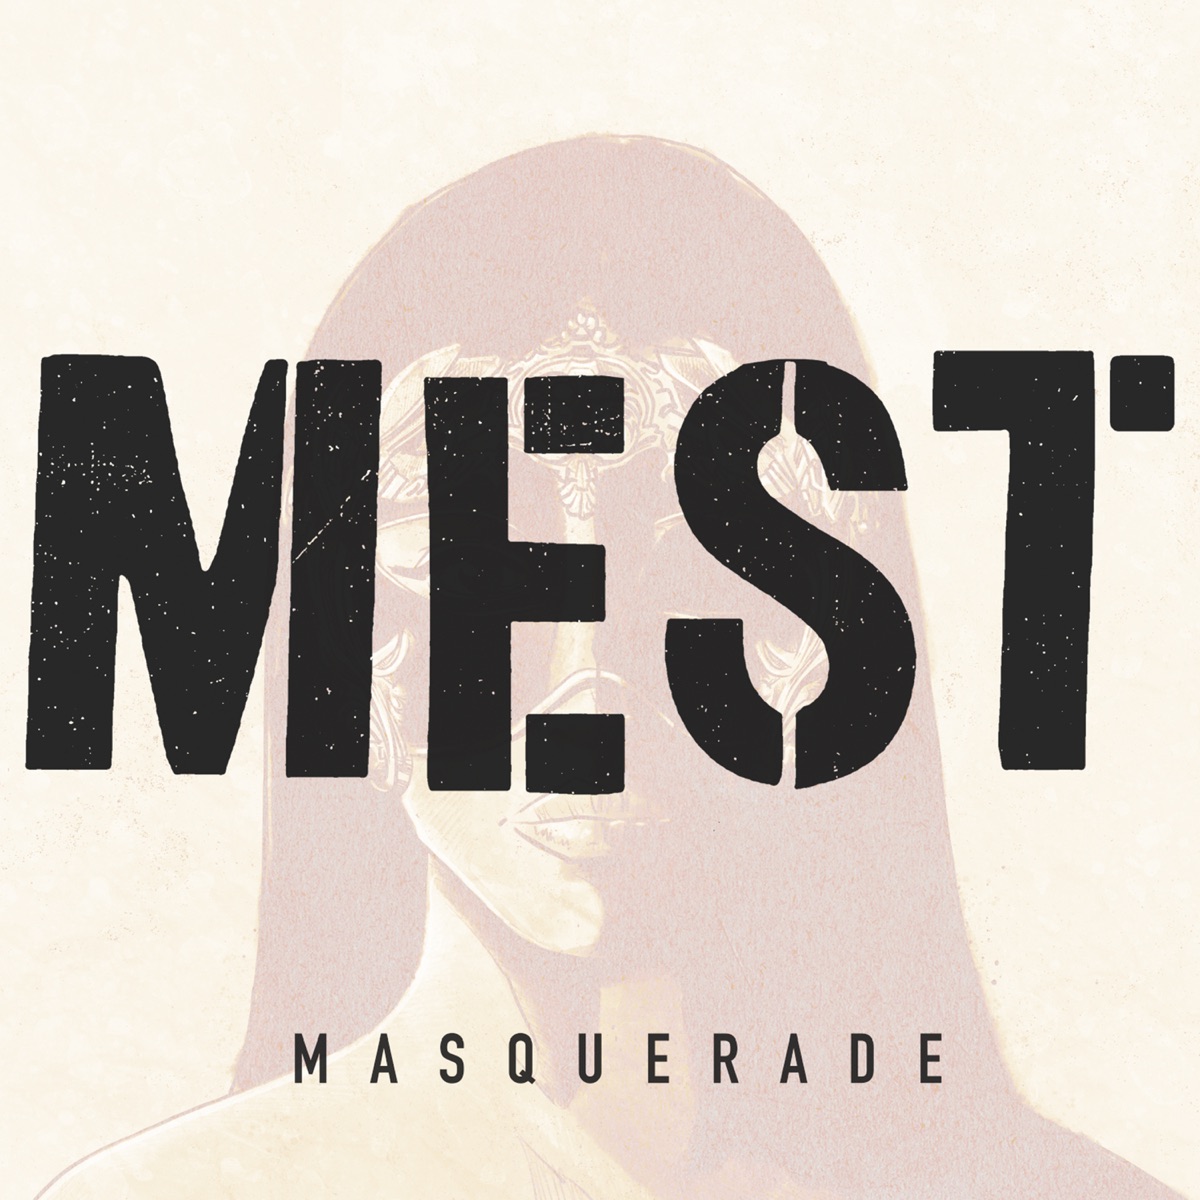 Masquerade - Single - Album by Mest - Apple Music